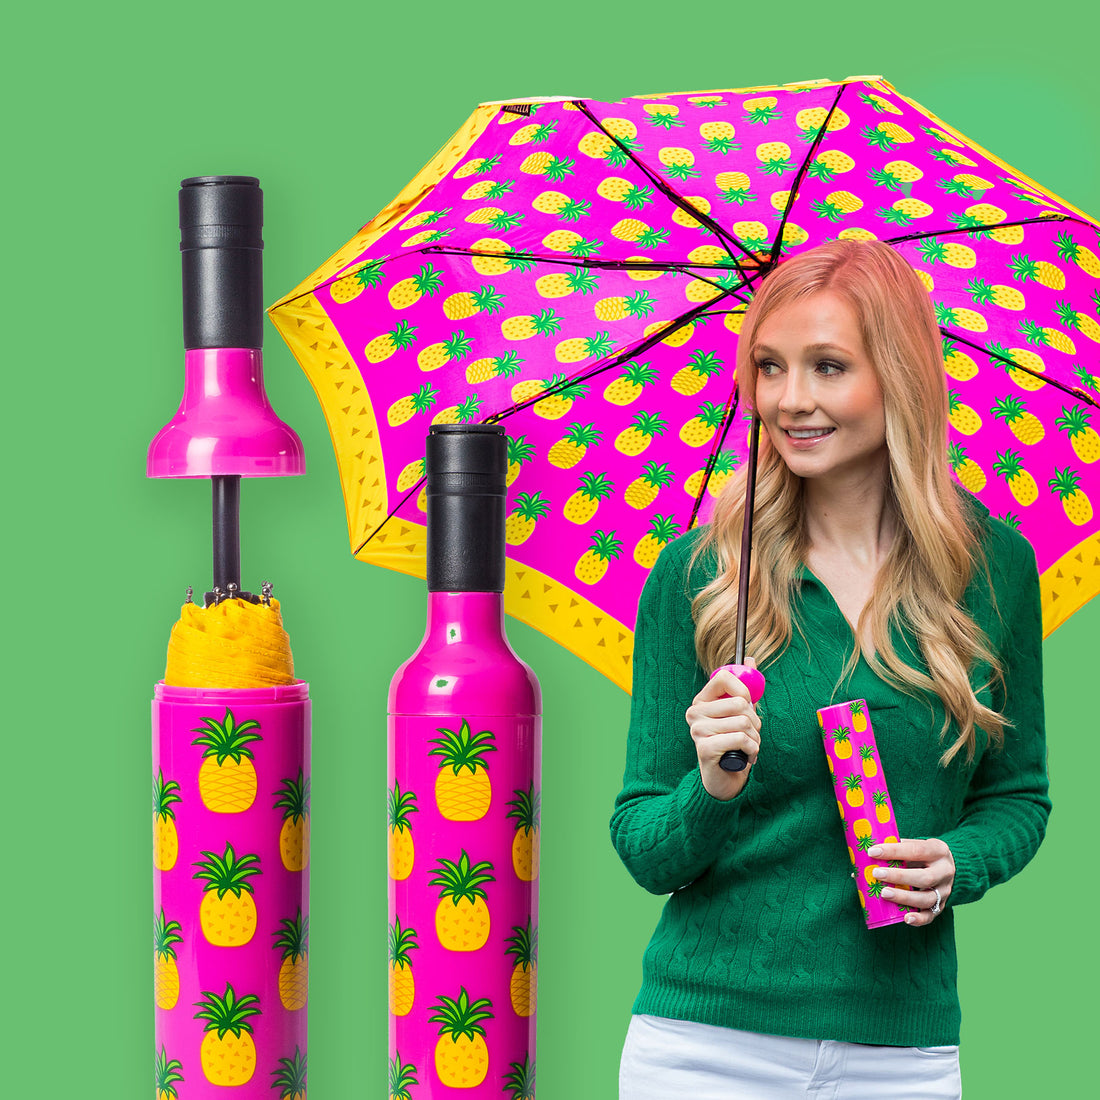  Vinrella bottle umbrellas